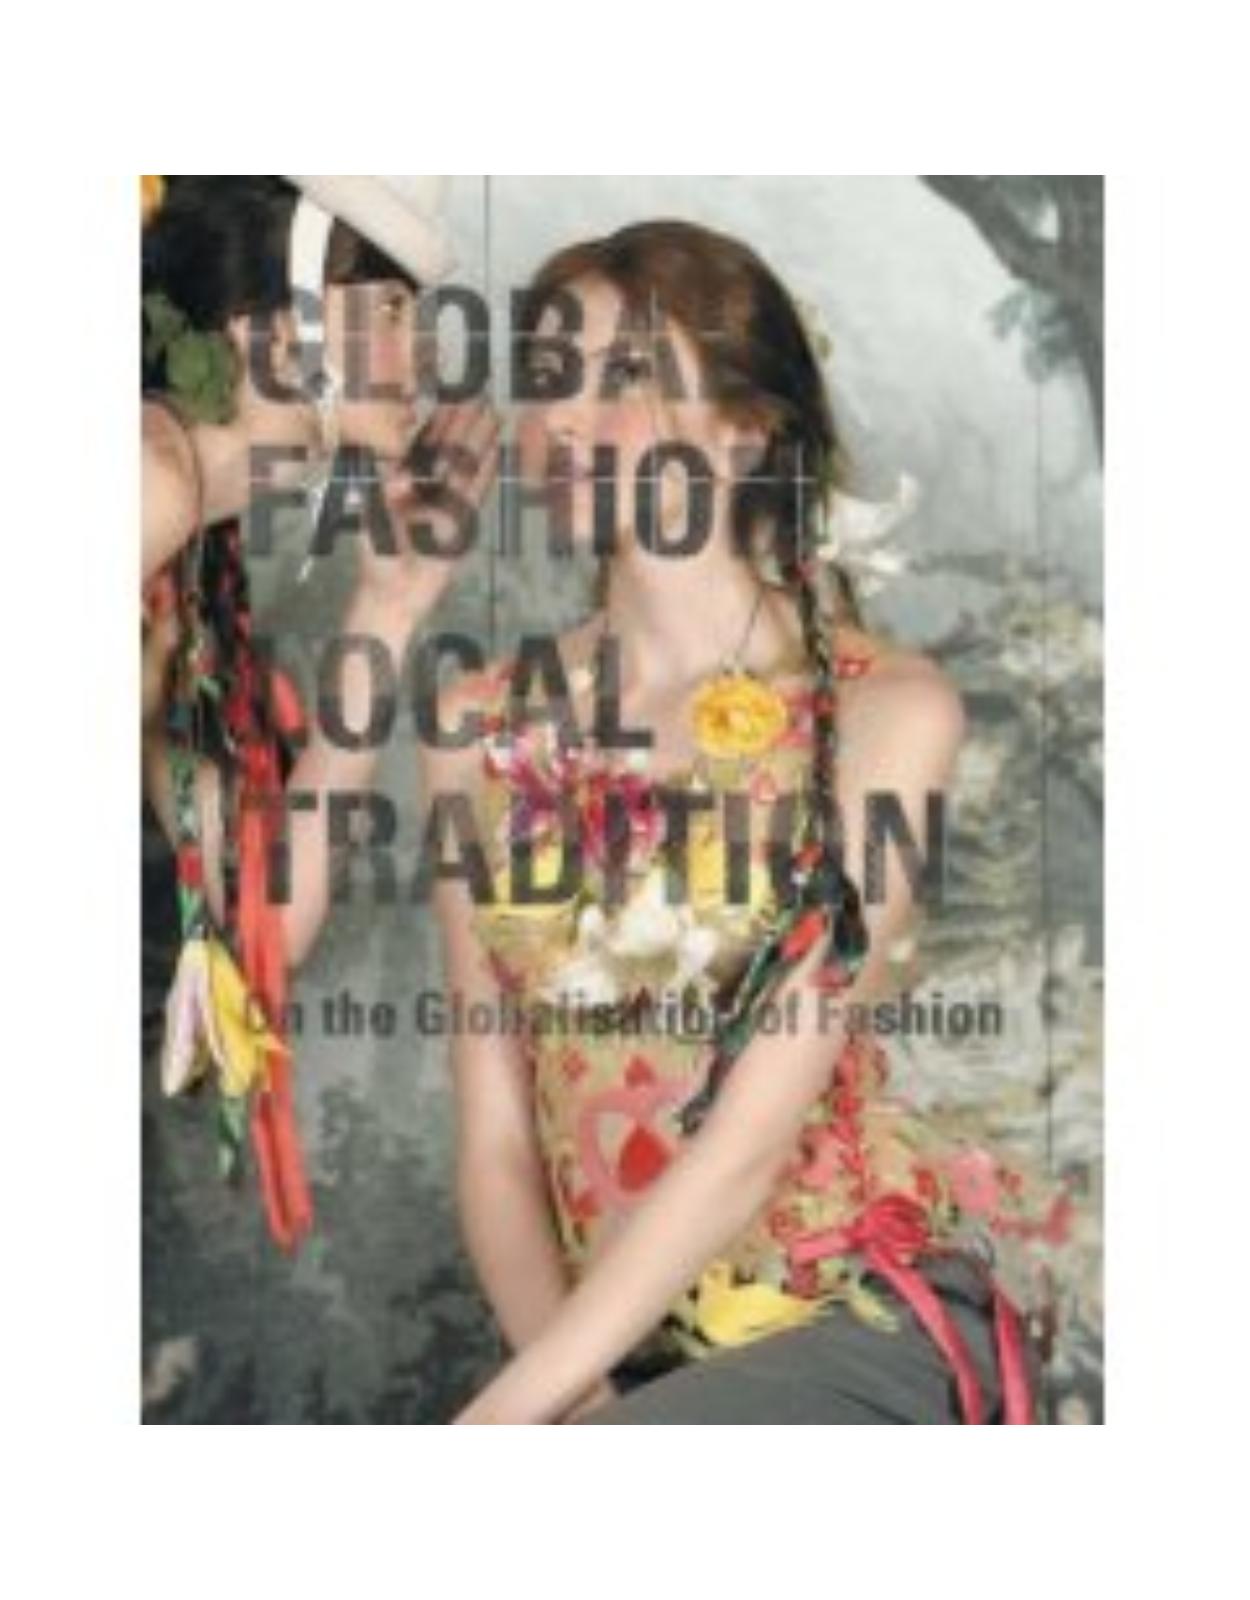 Global Fashion - Local Tradition